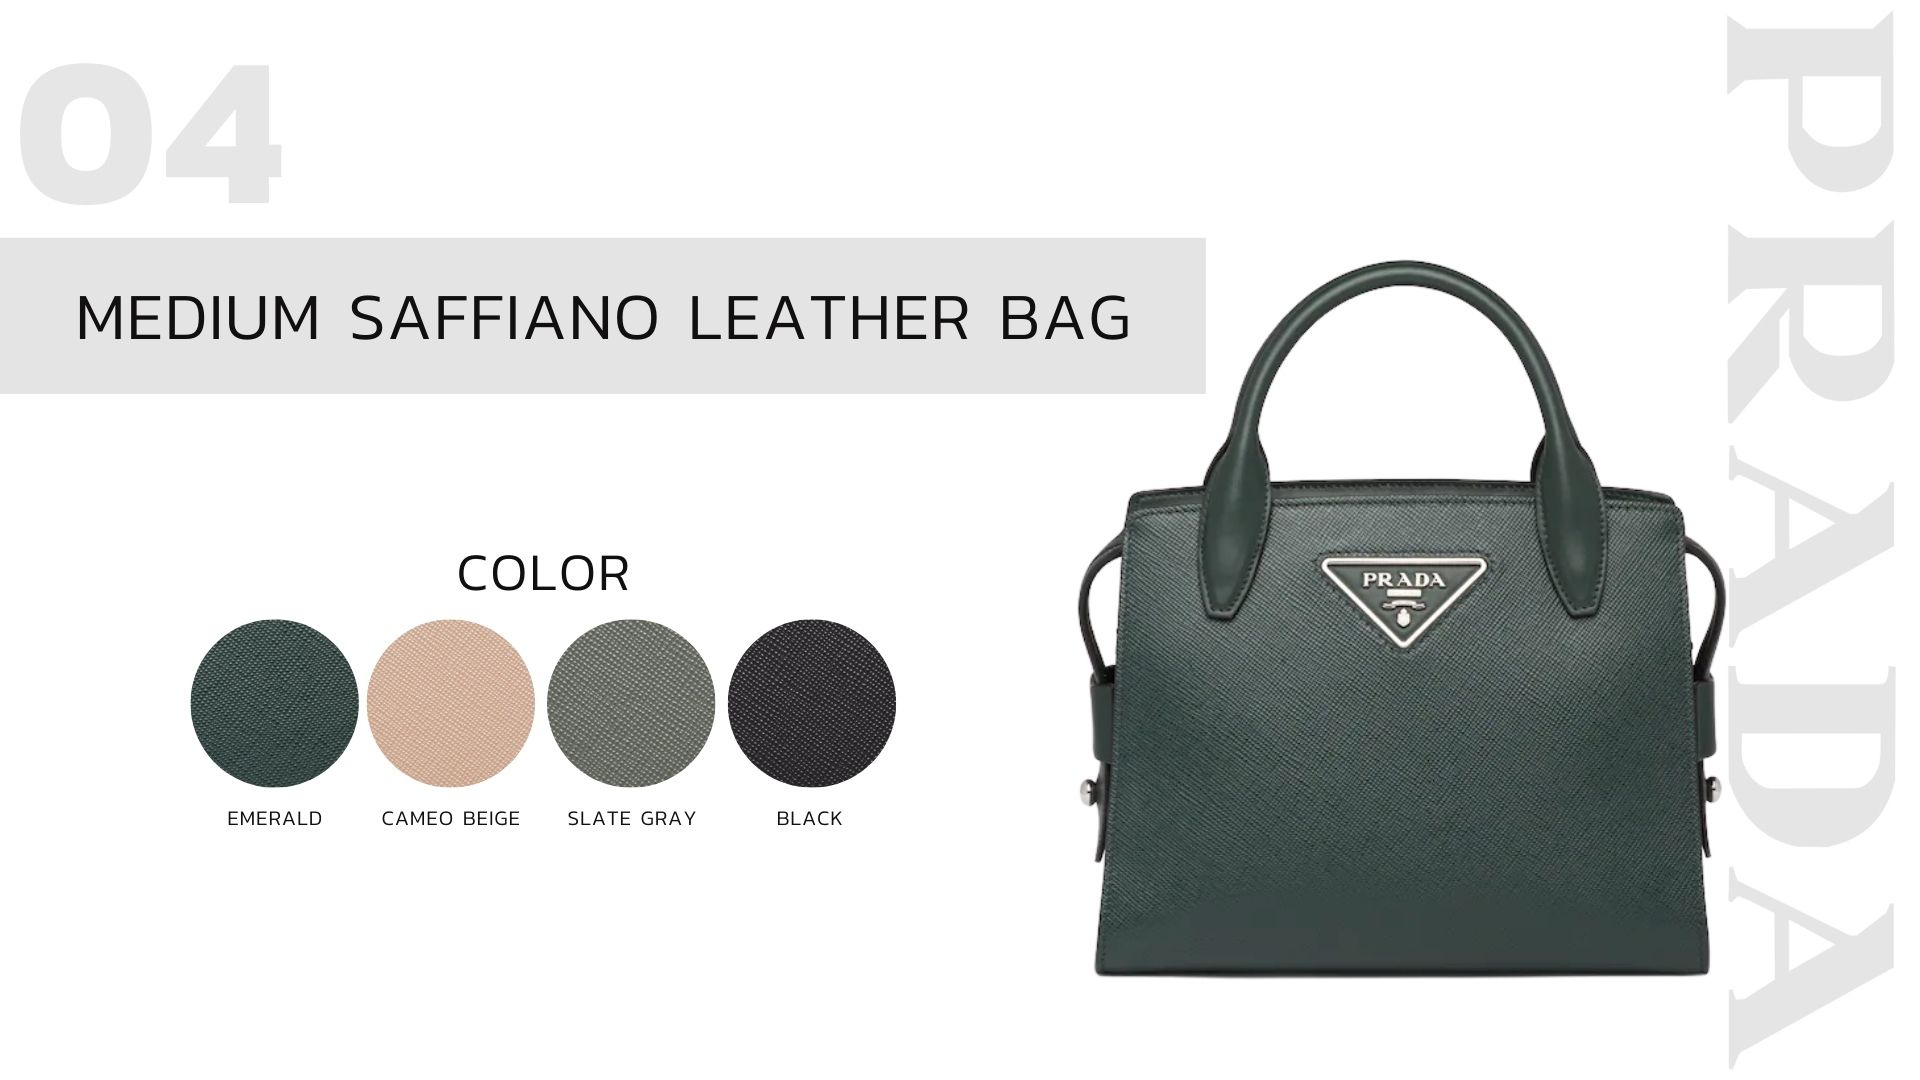 Medium Saffiano leather bag